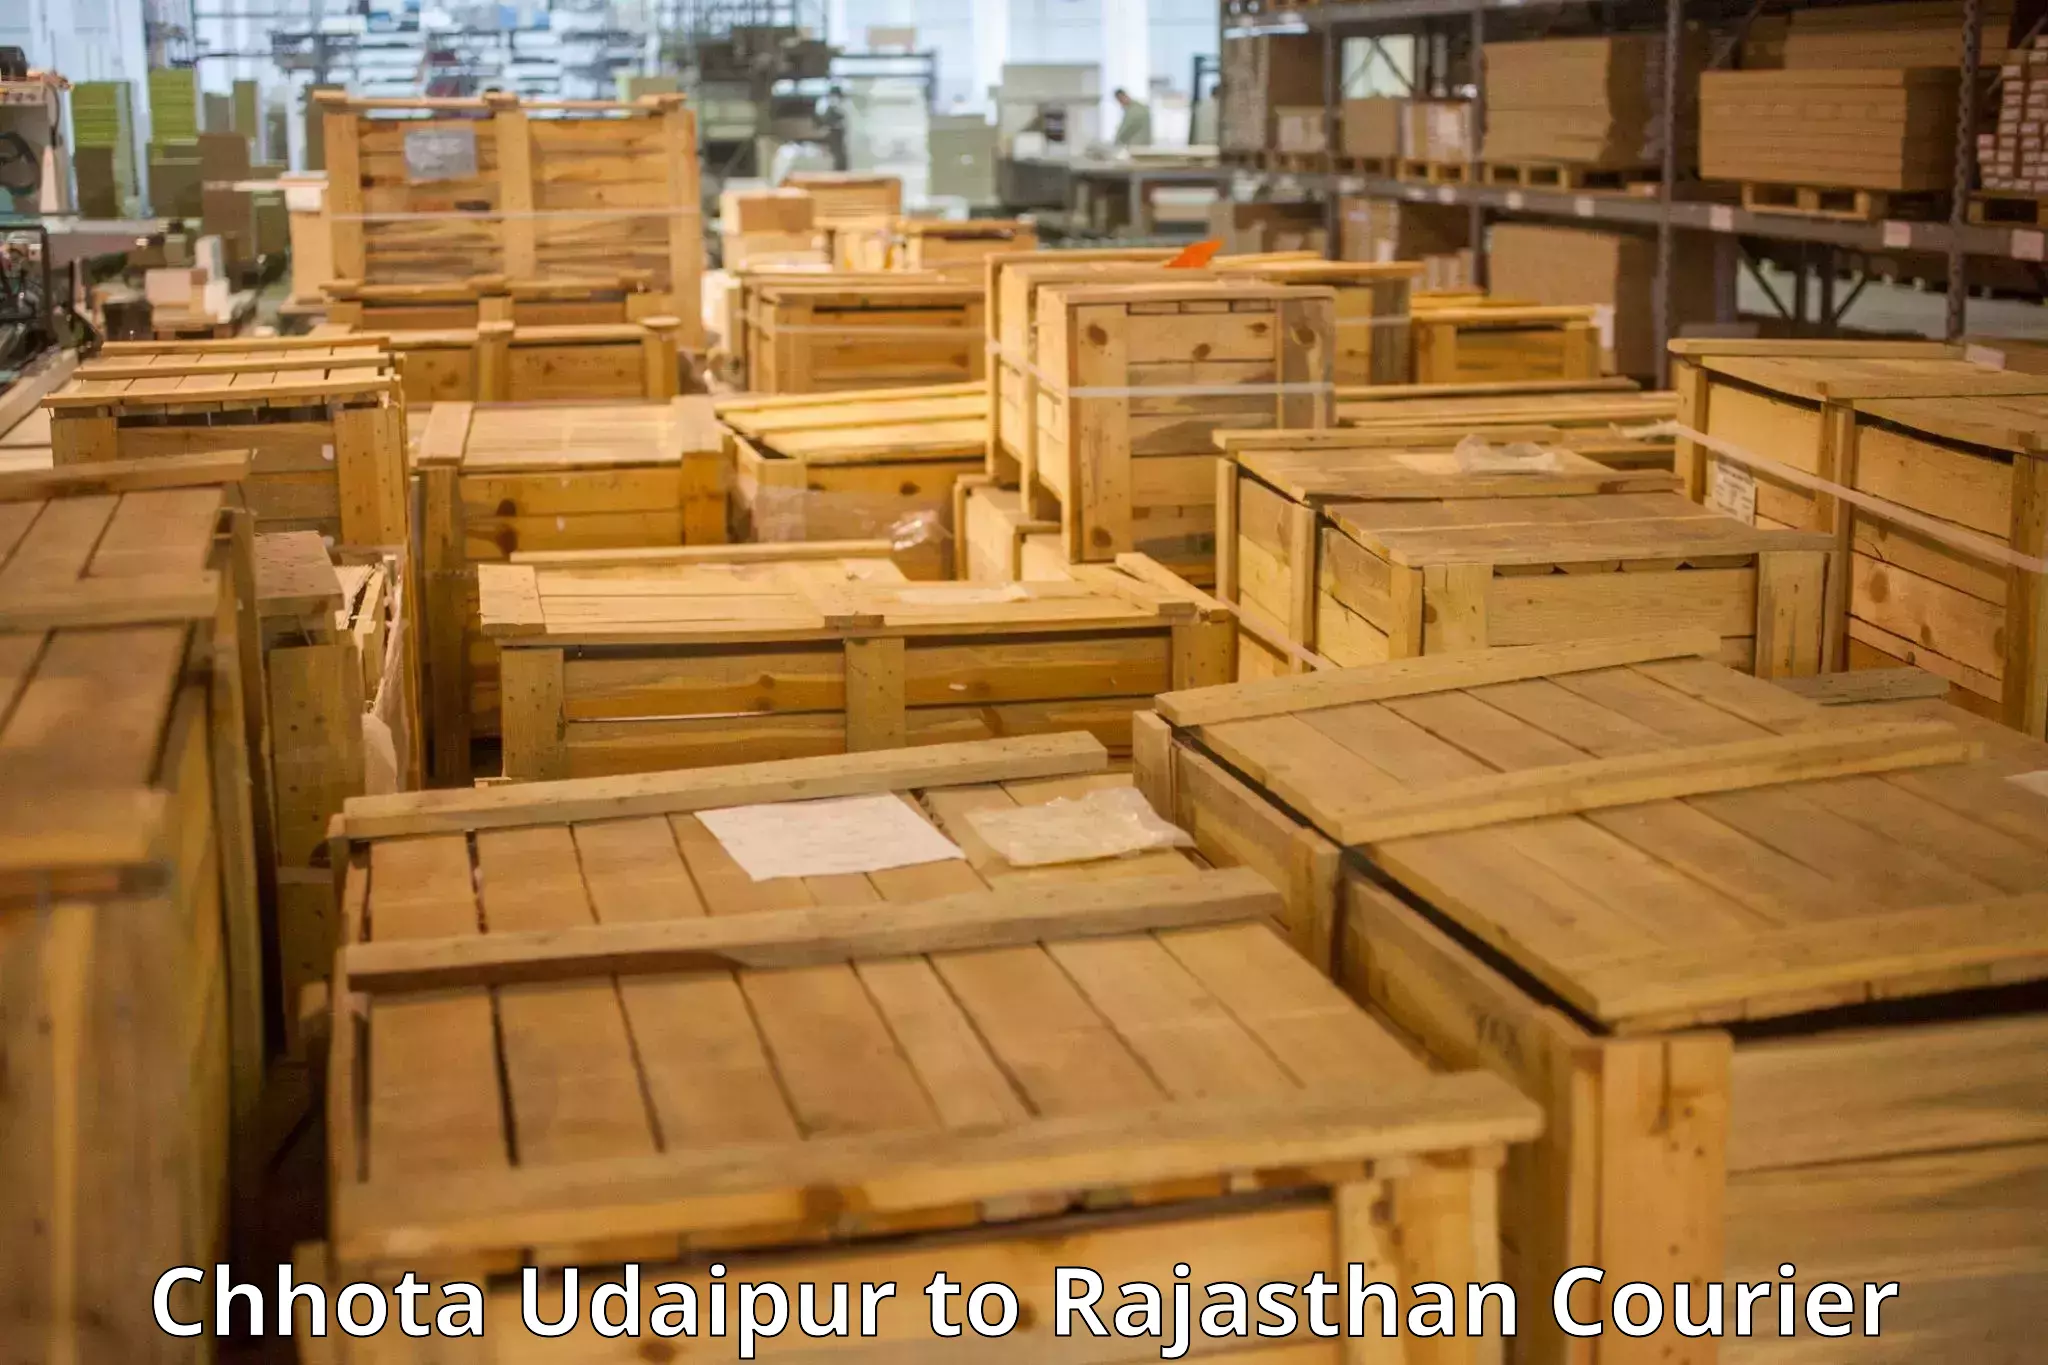 Baggage transport network Chhota Udaipur to Kota